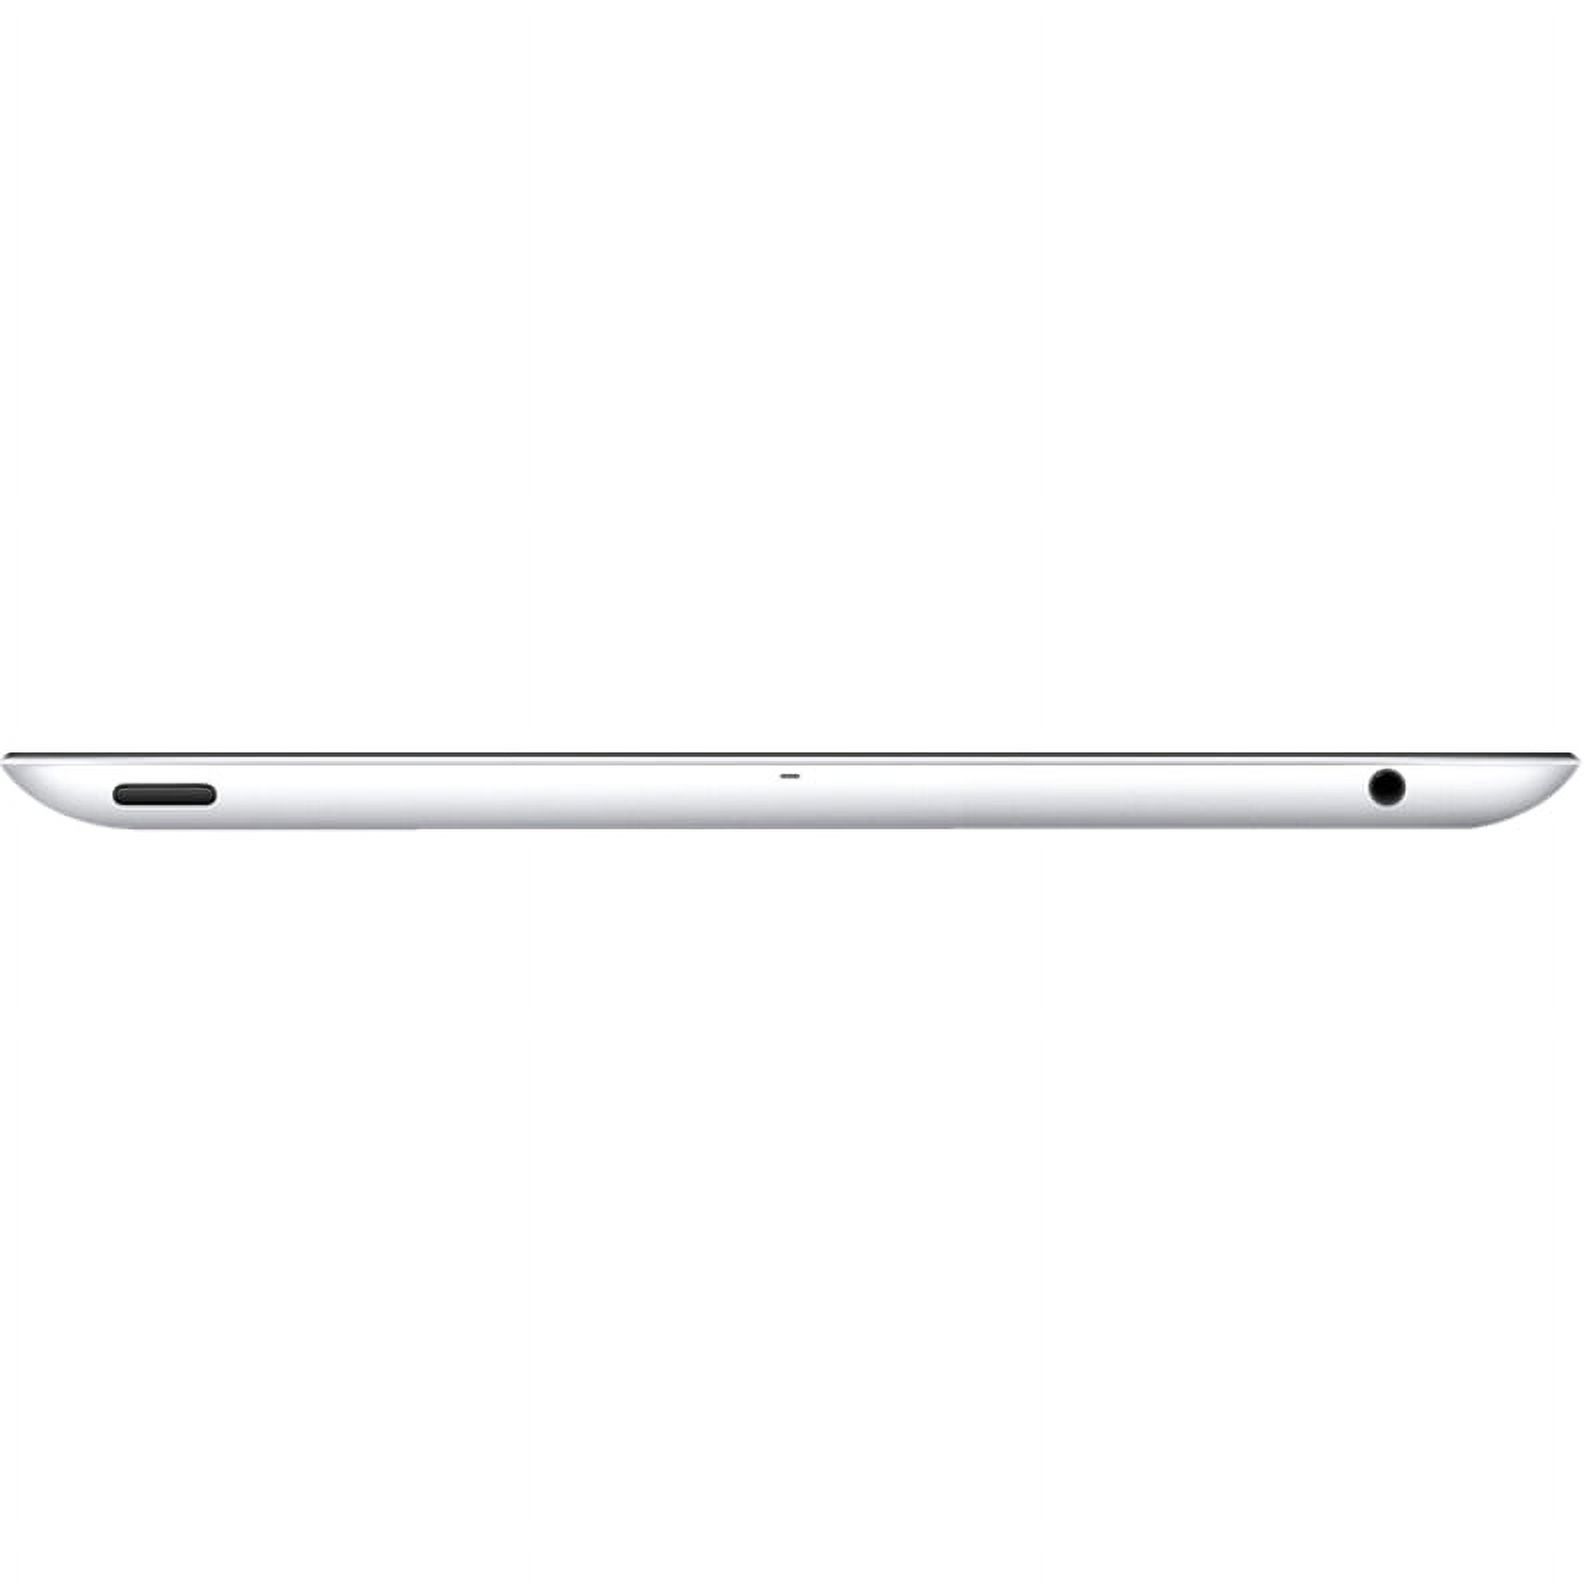 Apple iPad MD523LL/A Tablet, 9.7" QXGA, Apple A6X, 32 GB Storage, iOS 6, Black - image 5 of 6